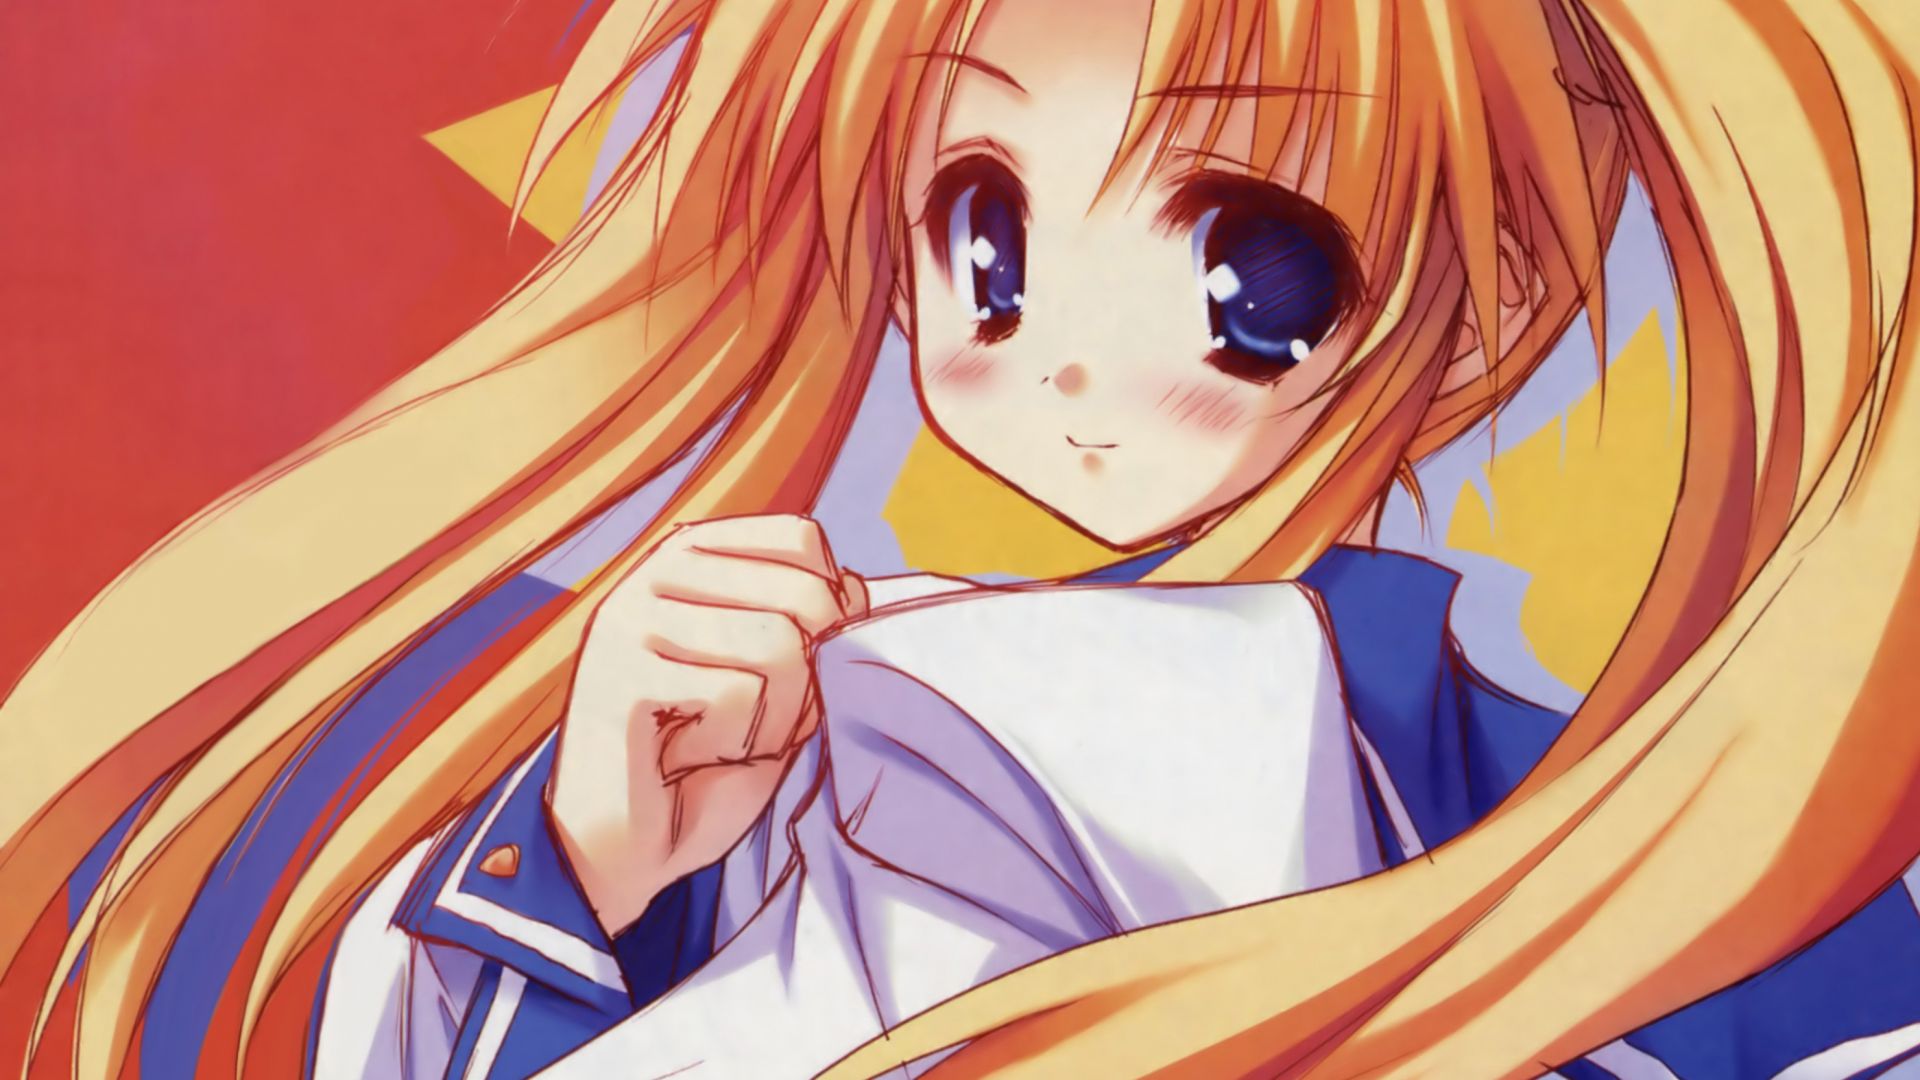 Wallpaper Twintail, blonde anime girl, cute, original